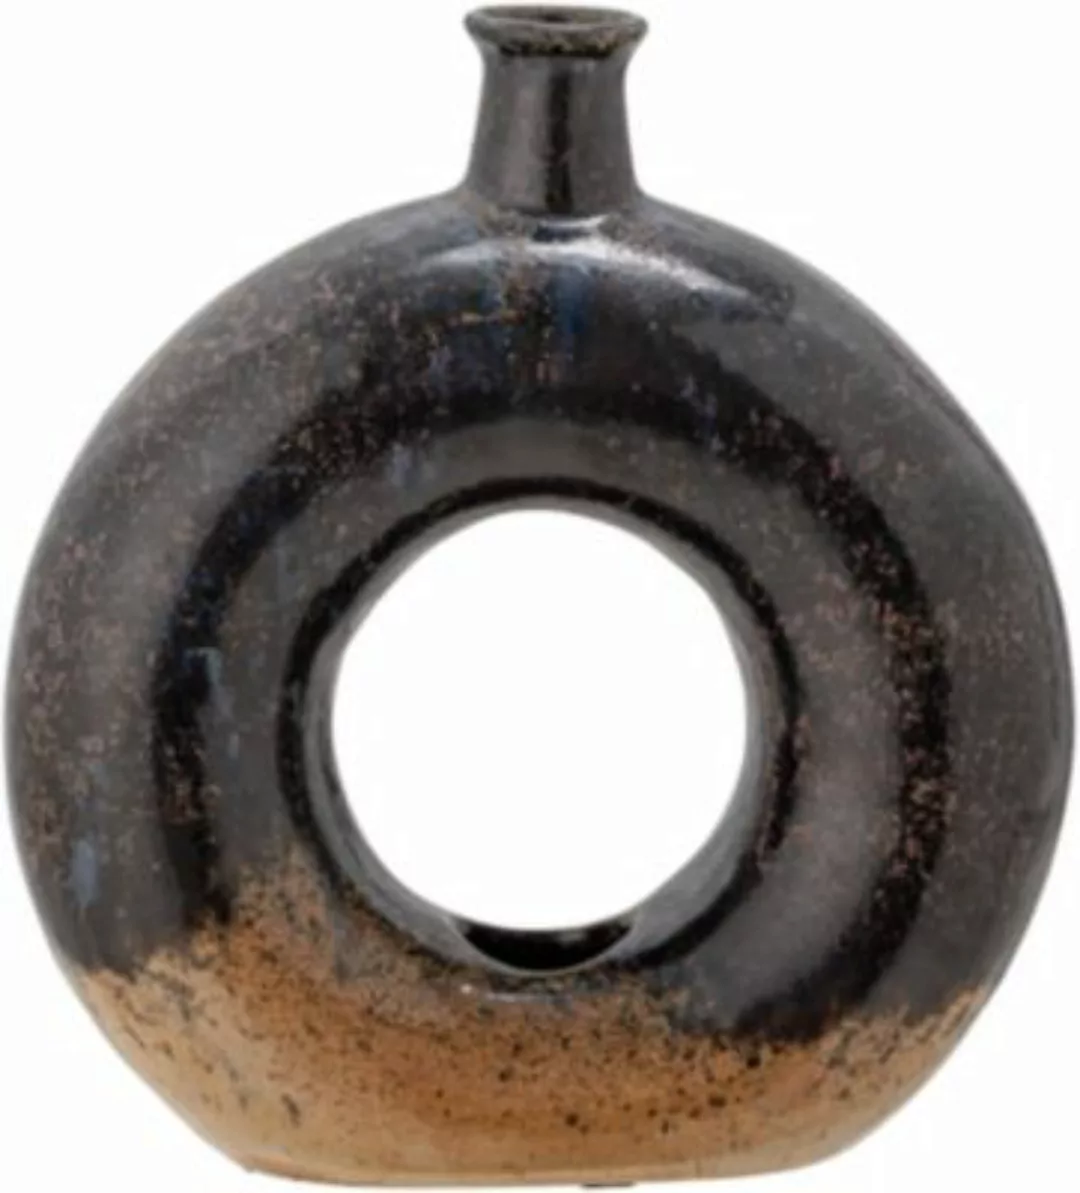 Vase  keramik grün / Keramik - Endbearbeitung mit Patina-Effekt H 19 cm - B günstig online kaufen